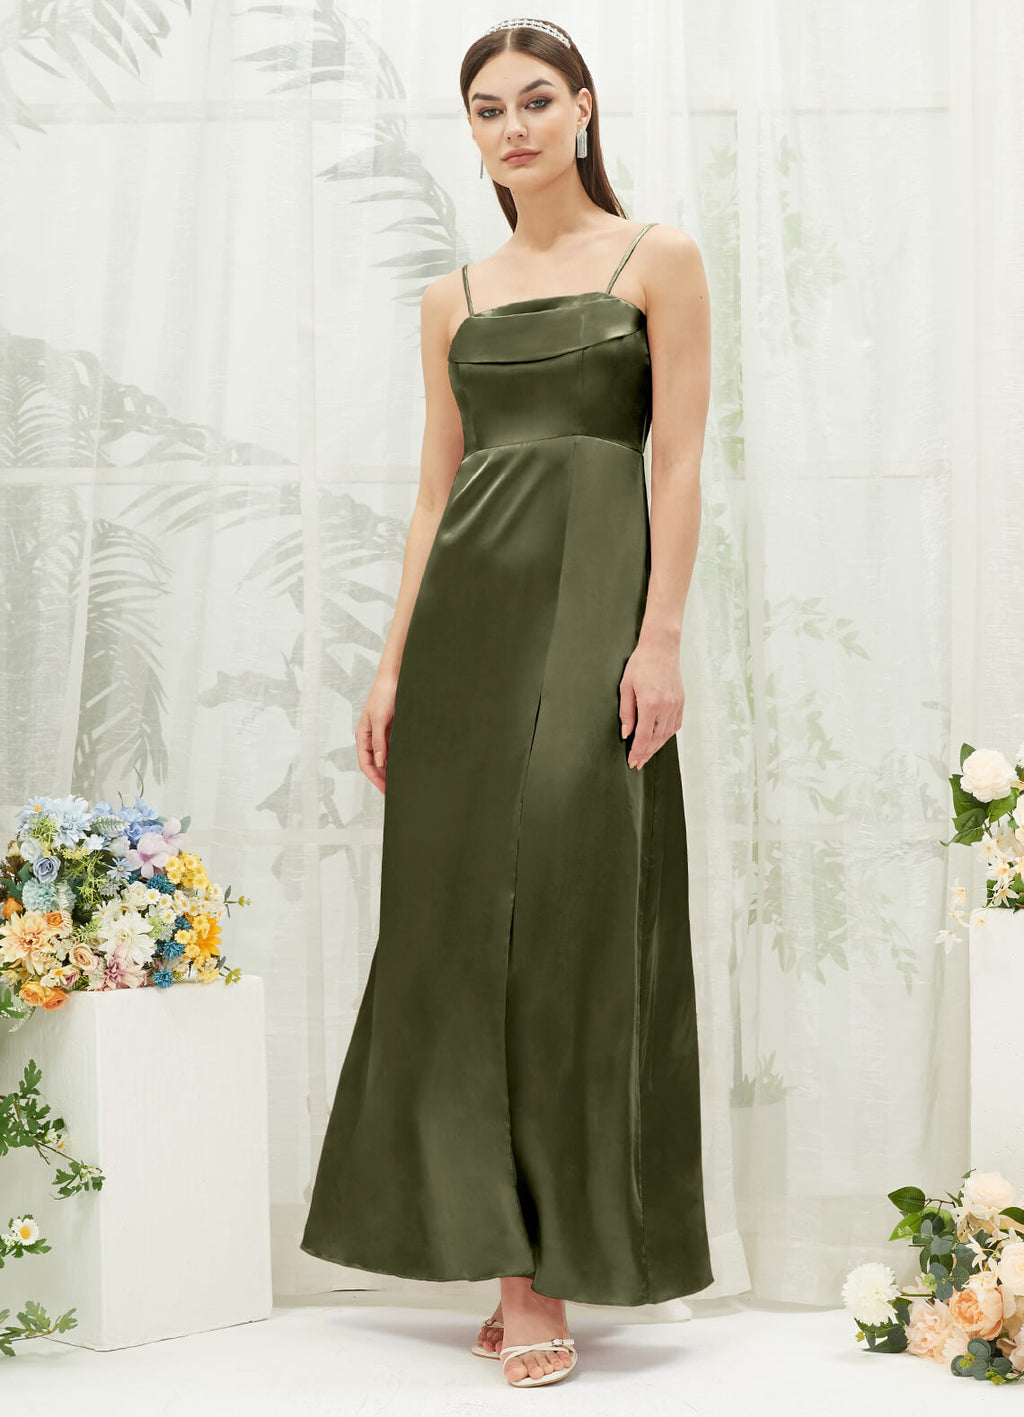 NZBridal Satin bridesmaid dresses BG30212 Mina Olive Green a